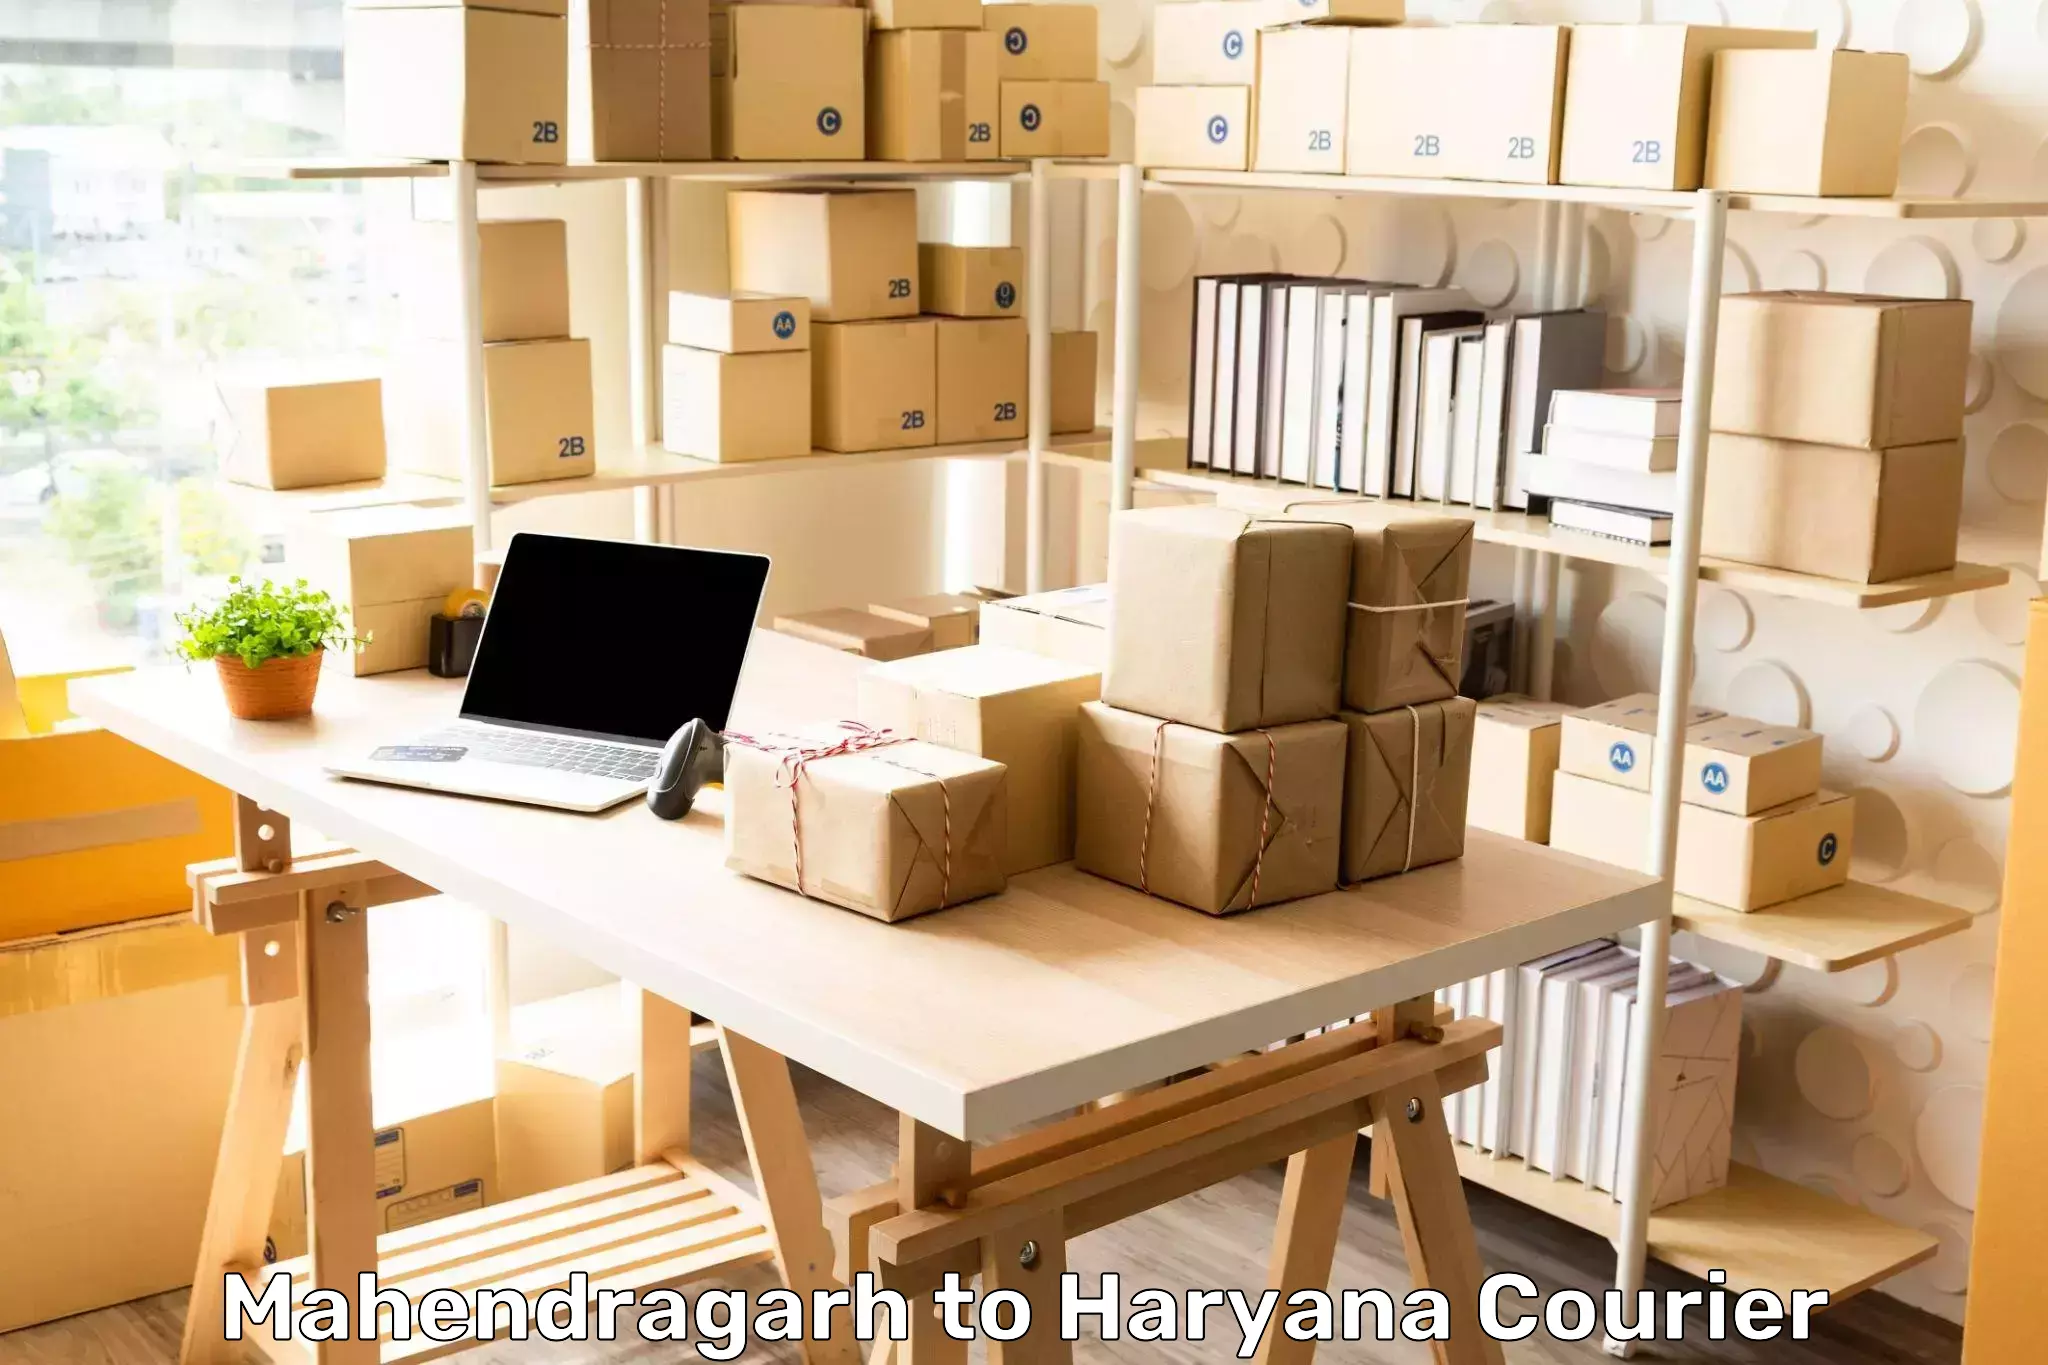 Supply chain efficiency Mahendragarh to Bilaspur Haryana